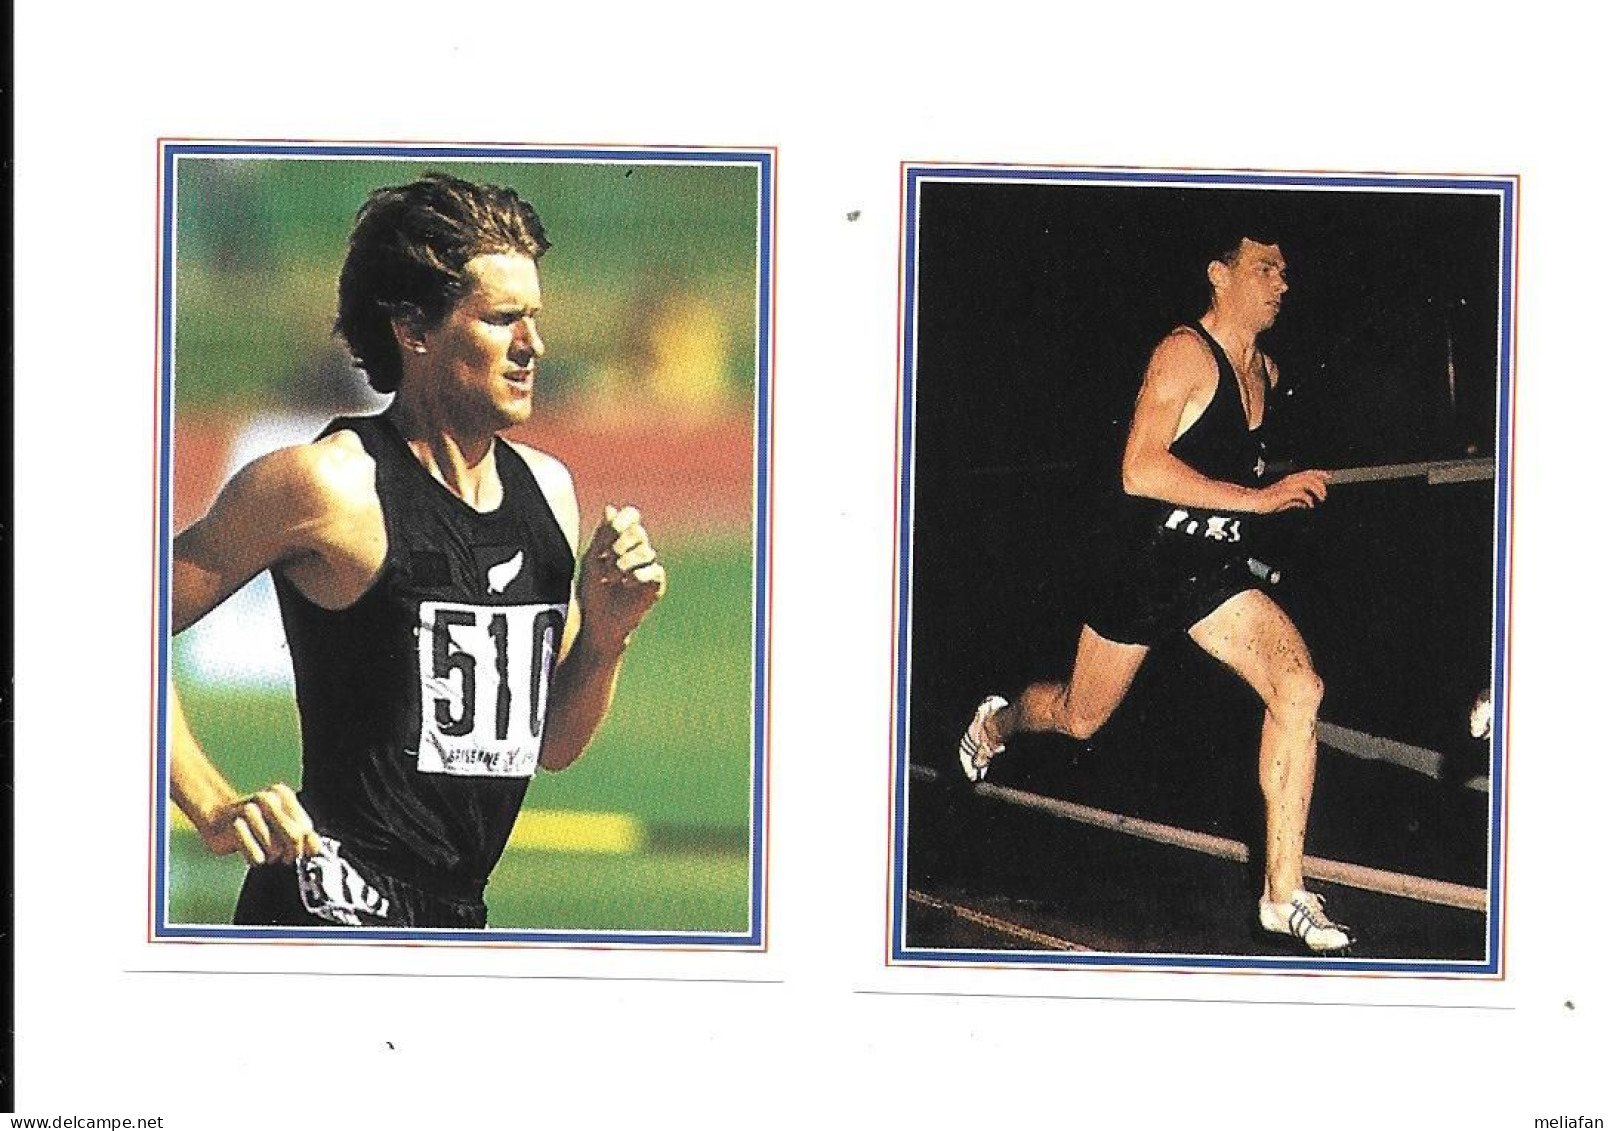 EJ41 - VIGNETTE SANITARIUM - NEW ZELAND HEROES - JOHN WALKER - PETER SNELL - Leichtathletik